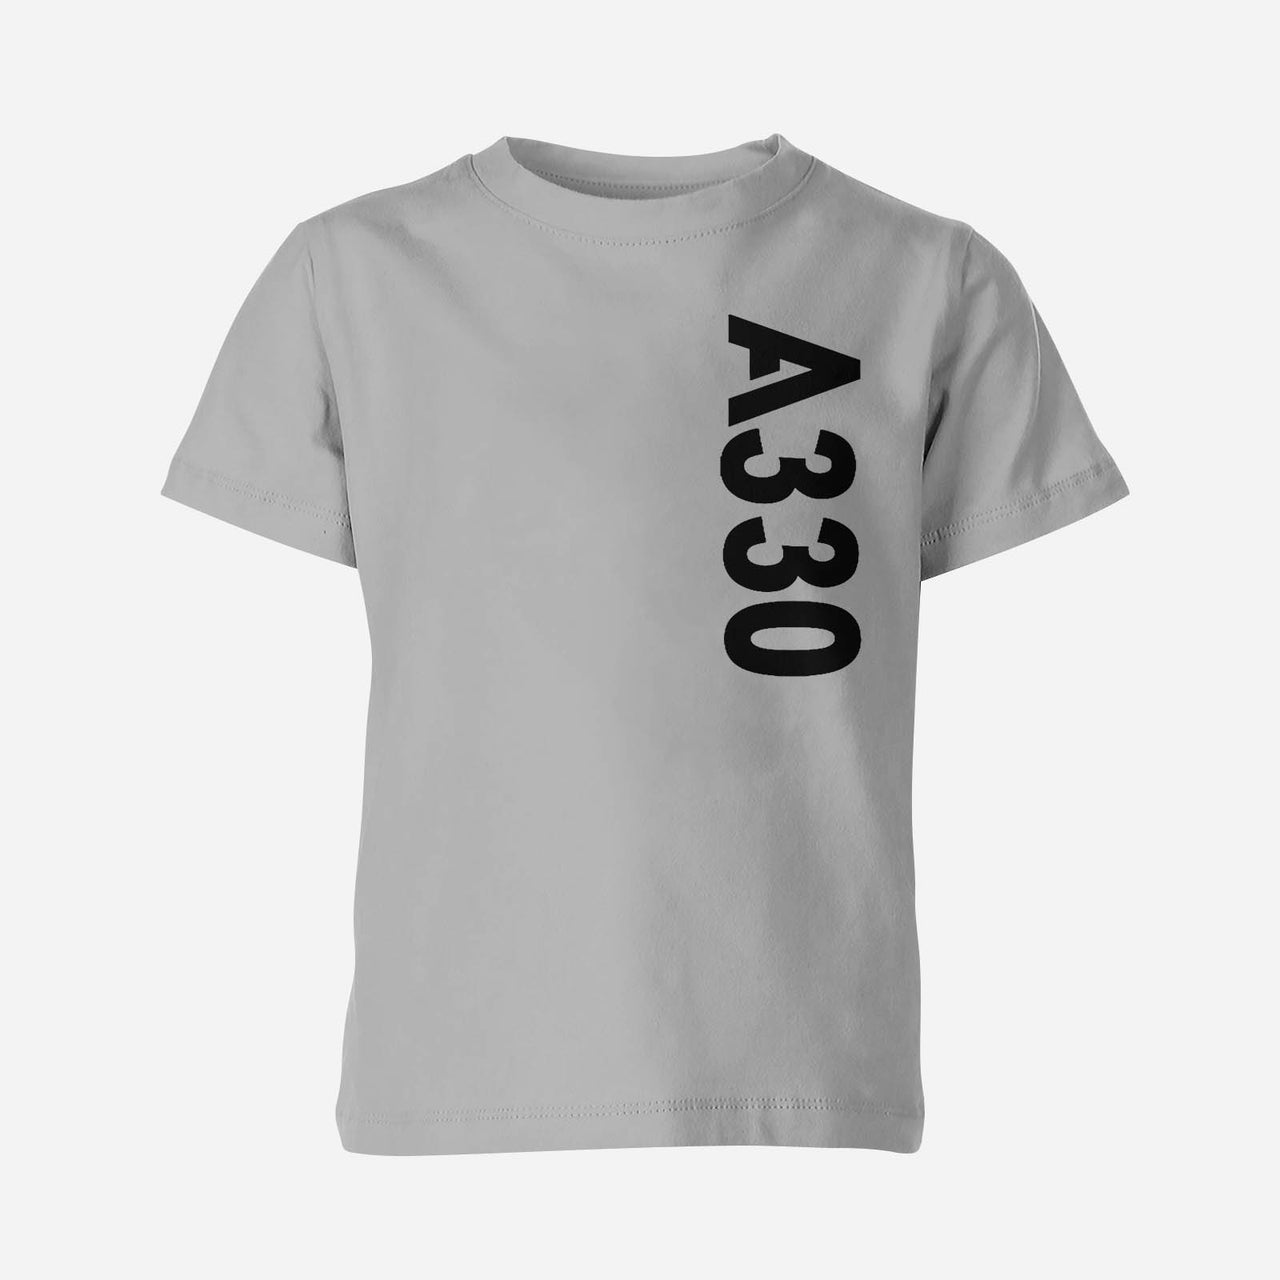 A330 Side Text Designed Children T-Shirts